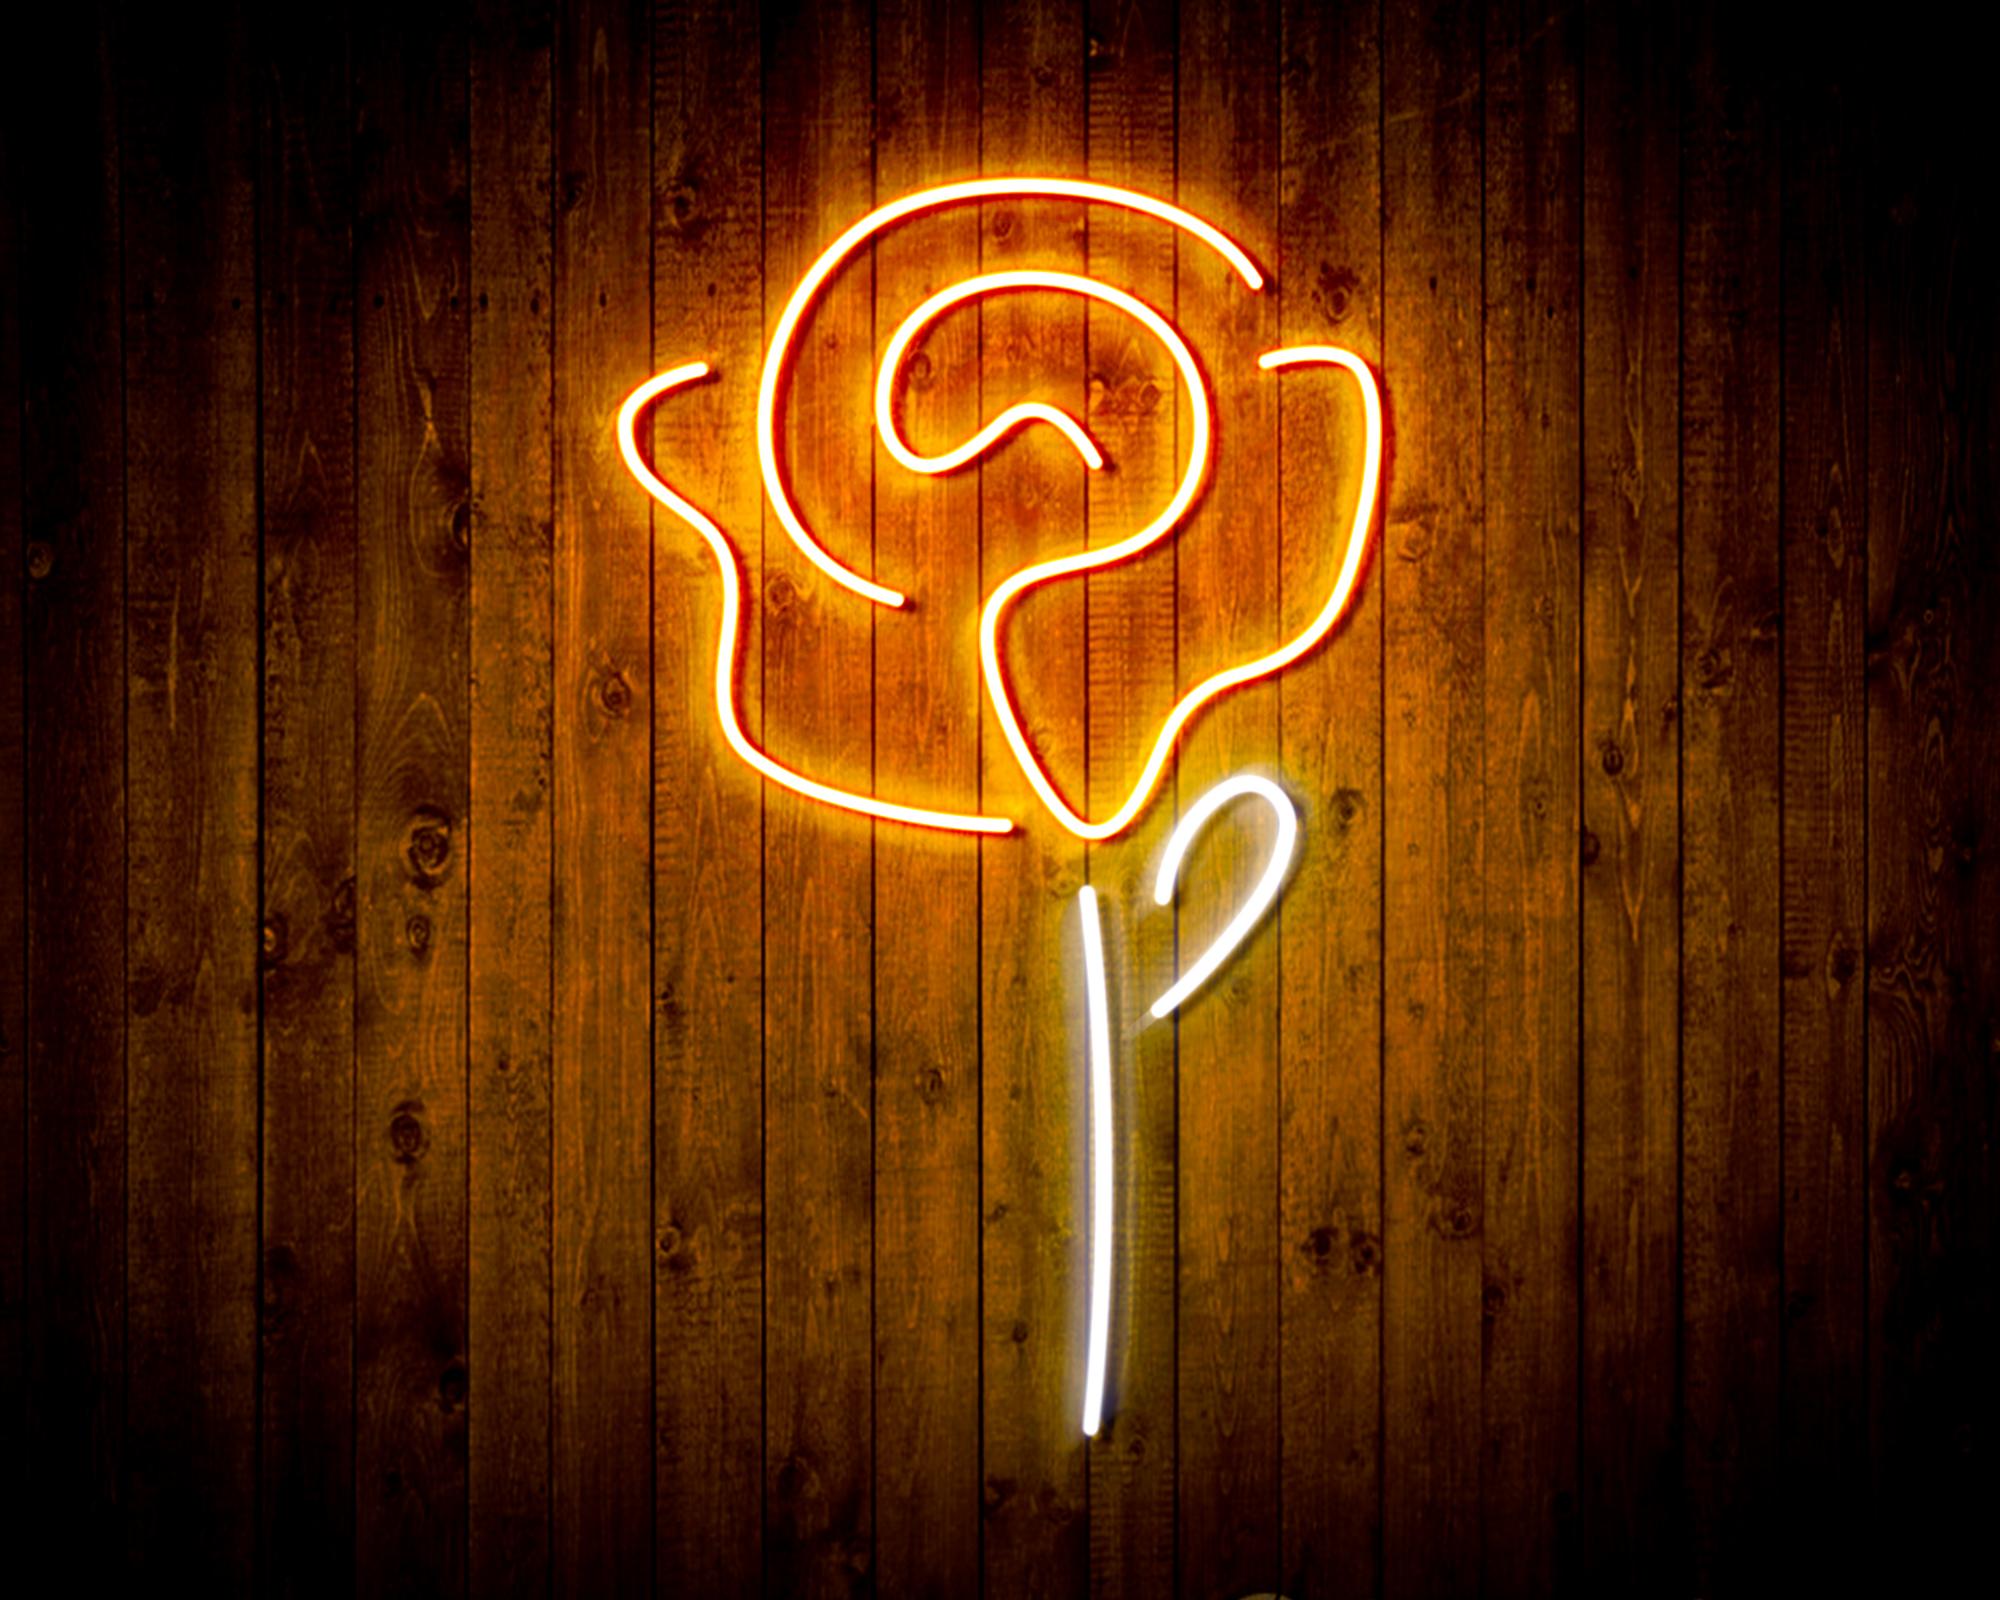 Rose LED Neon Sign Wall Light